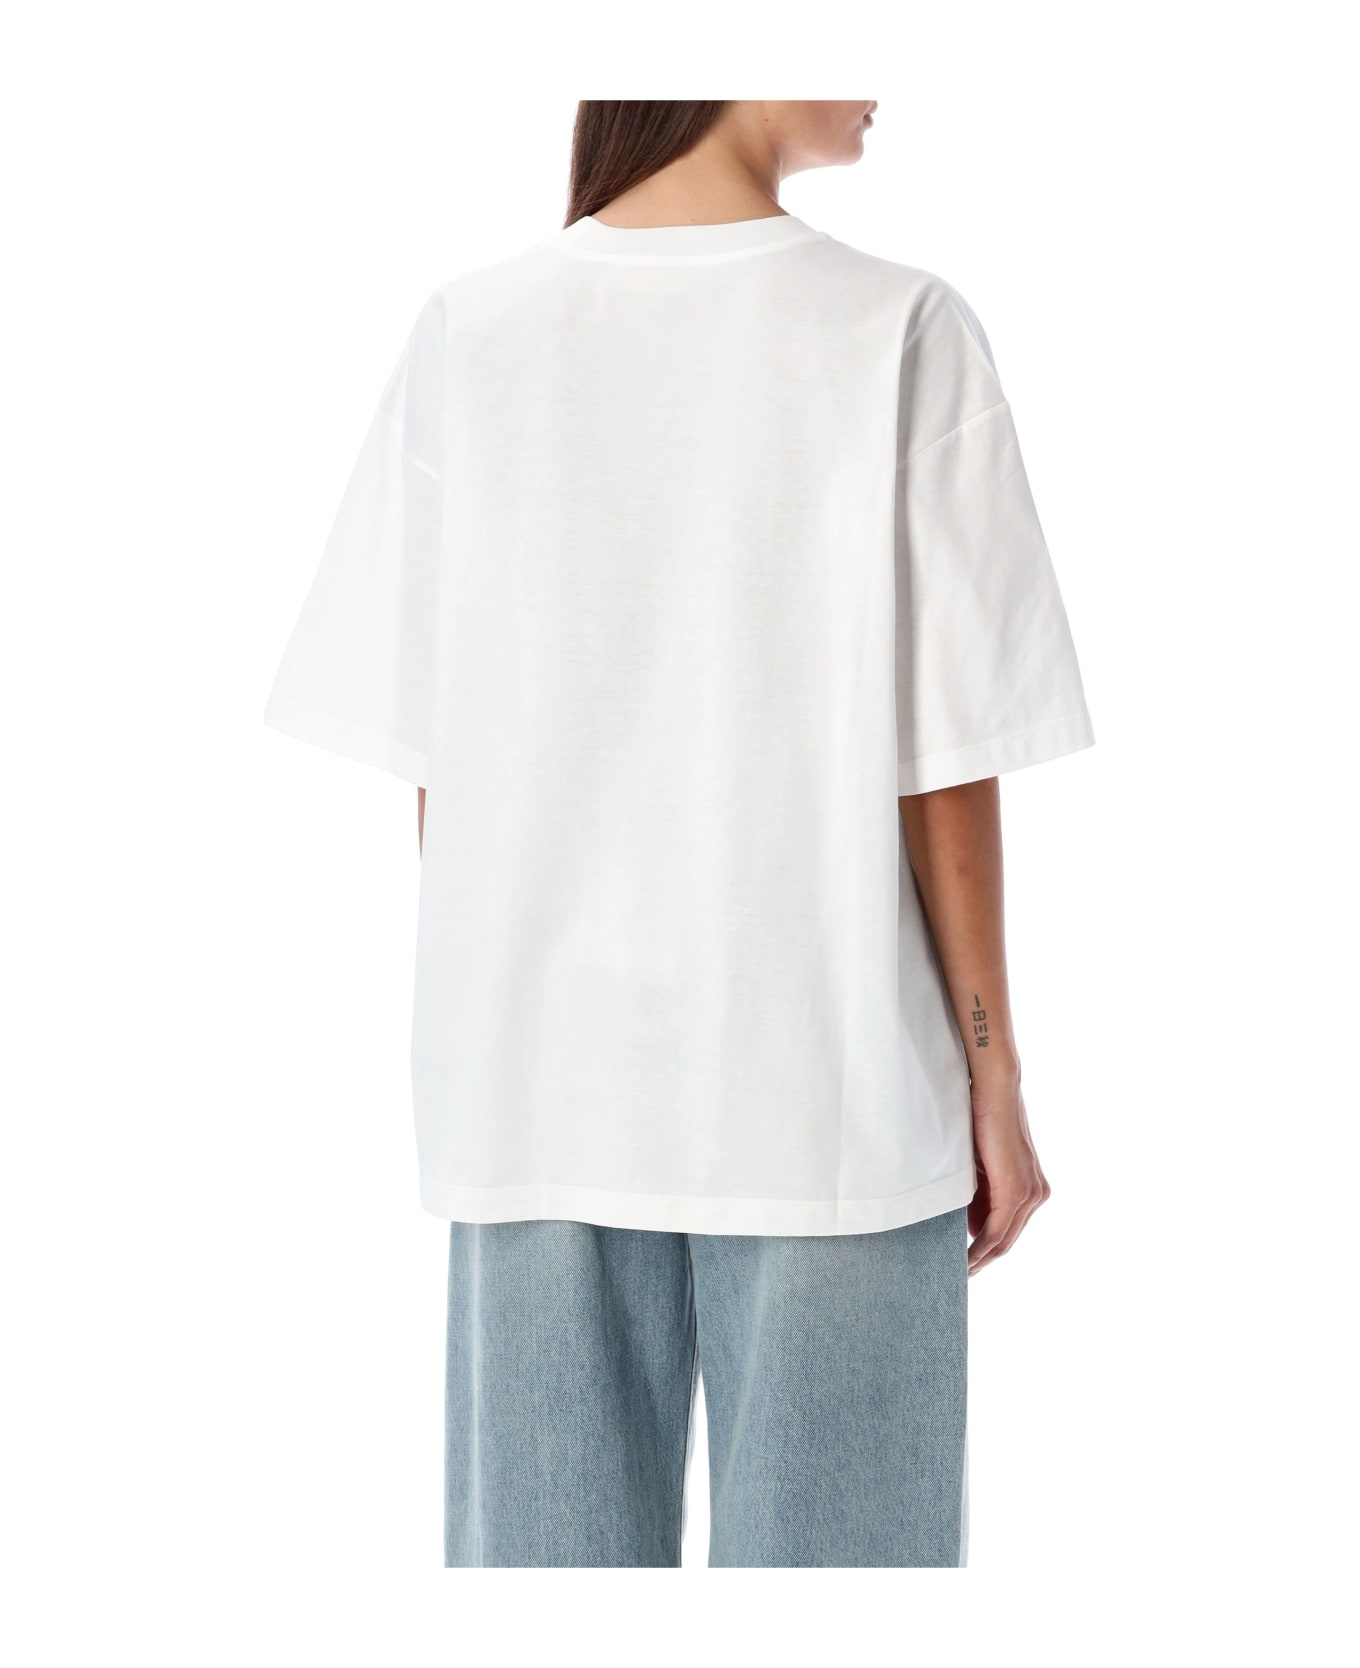 Marni Heart T-shirt - White